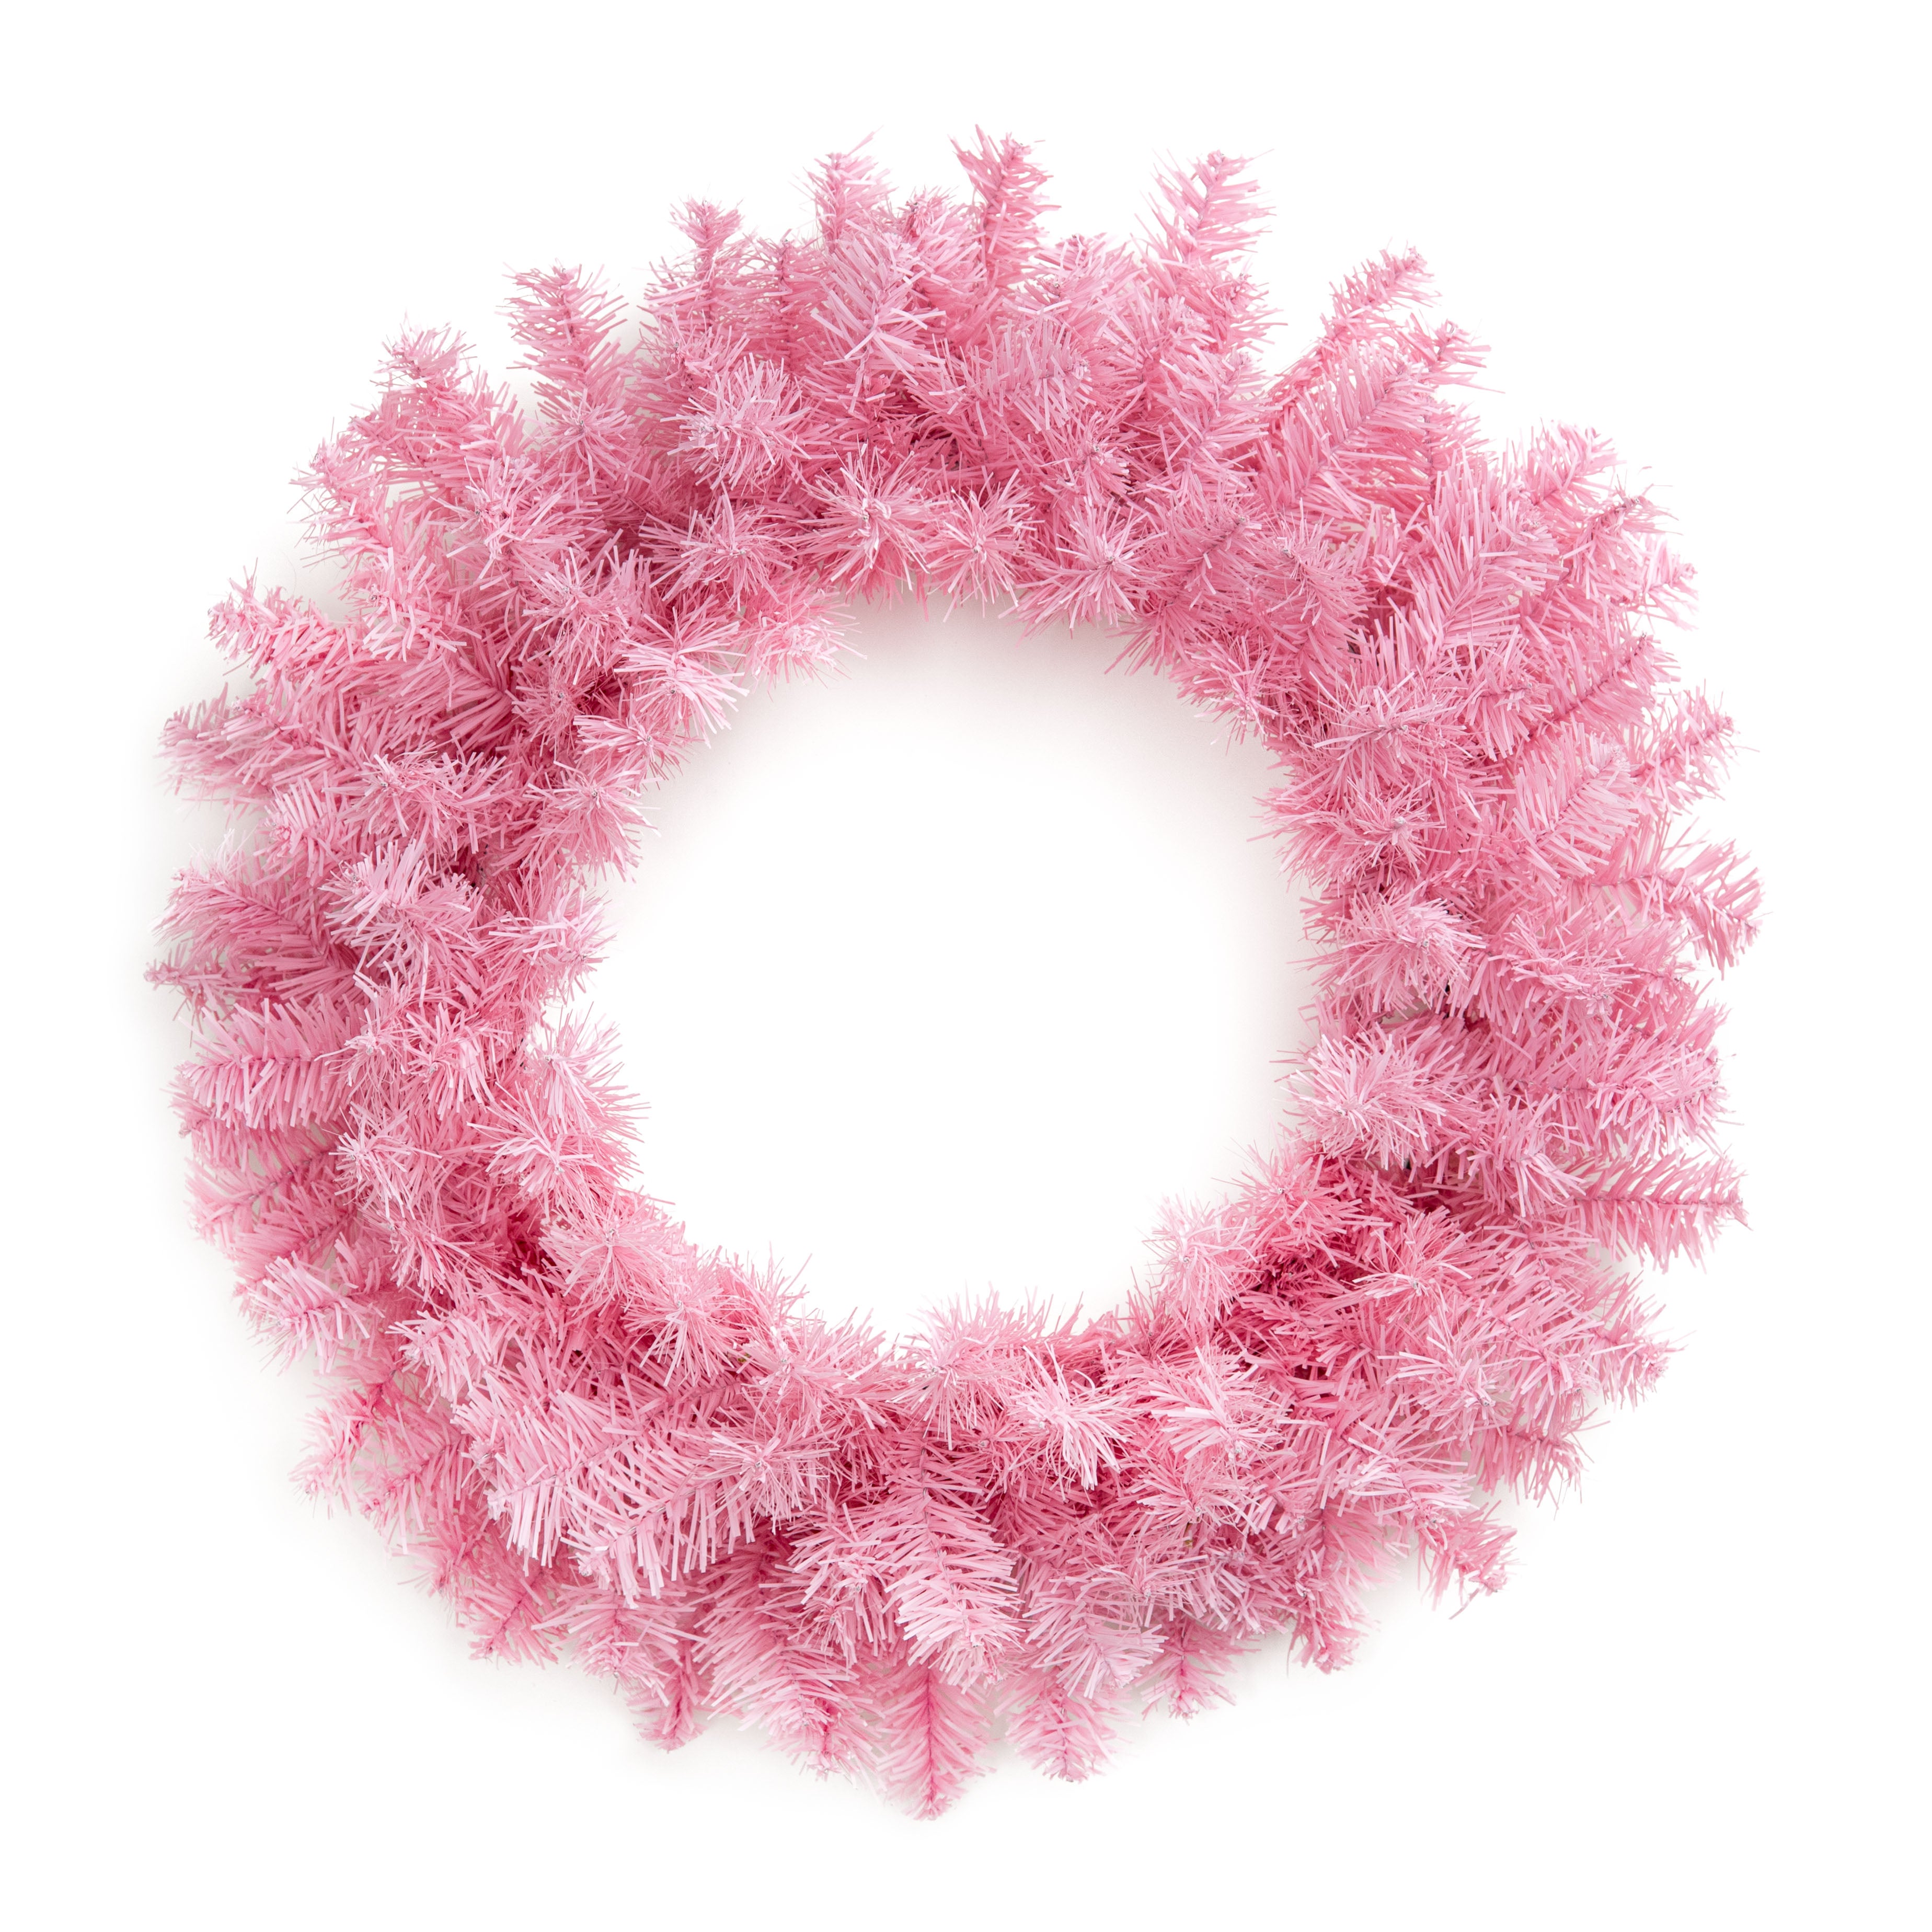 24" King's Pine Wreath: Pink